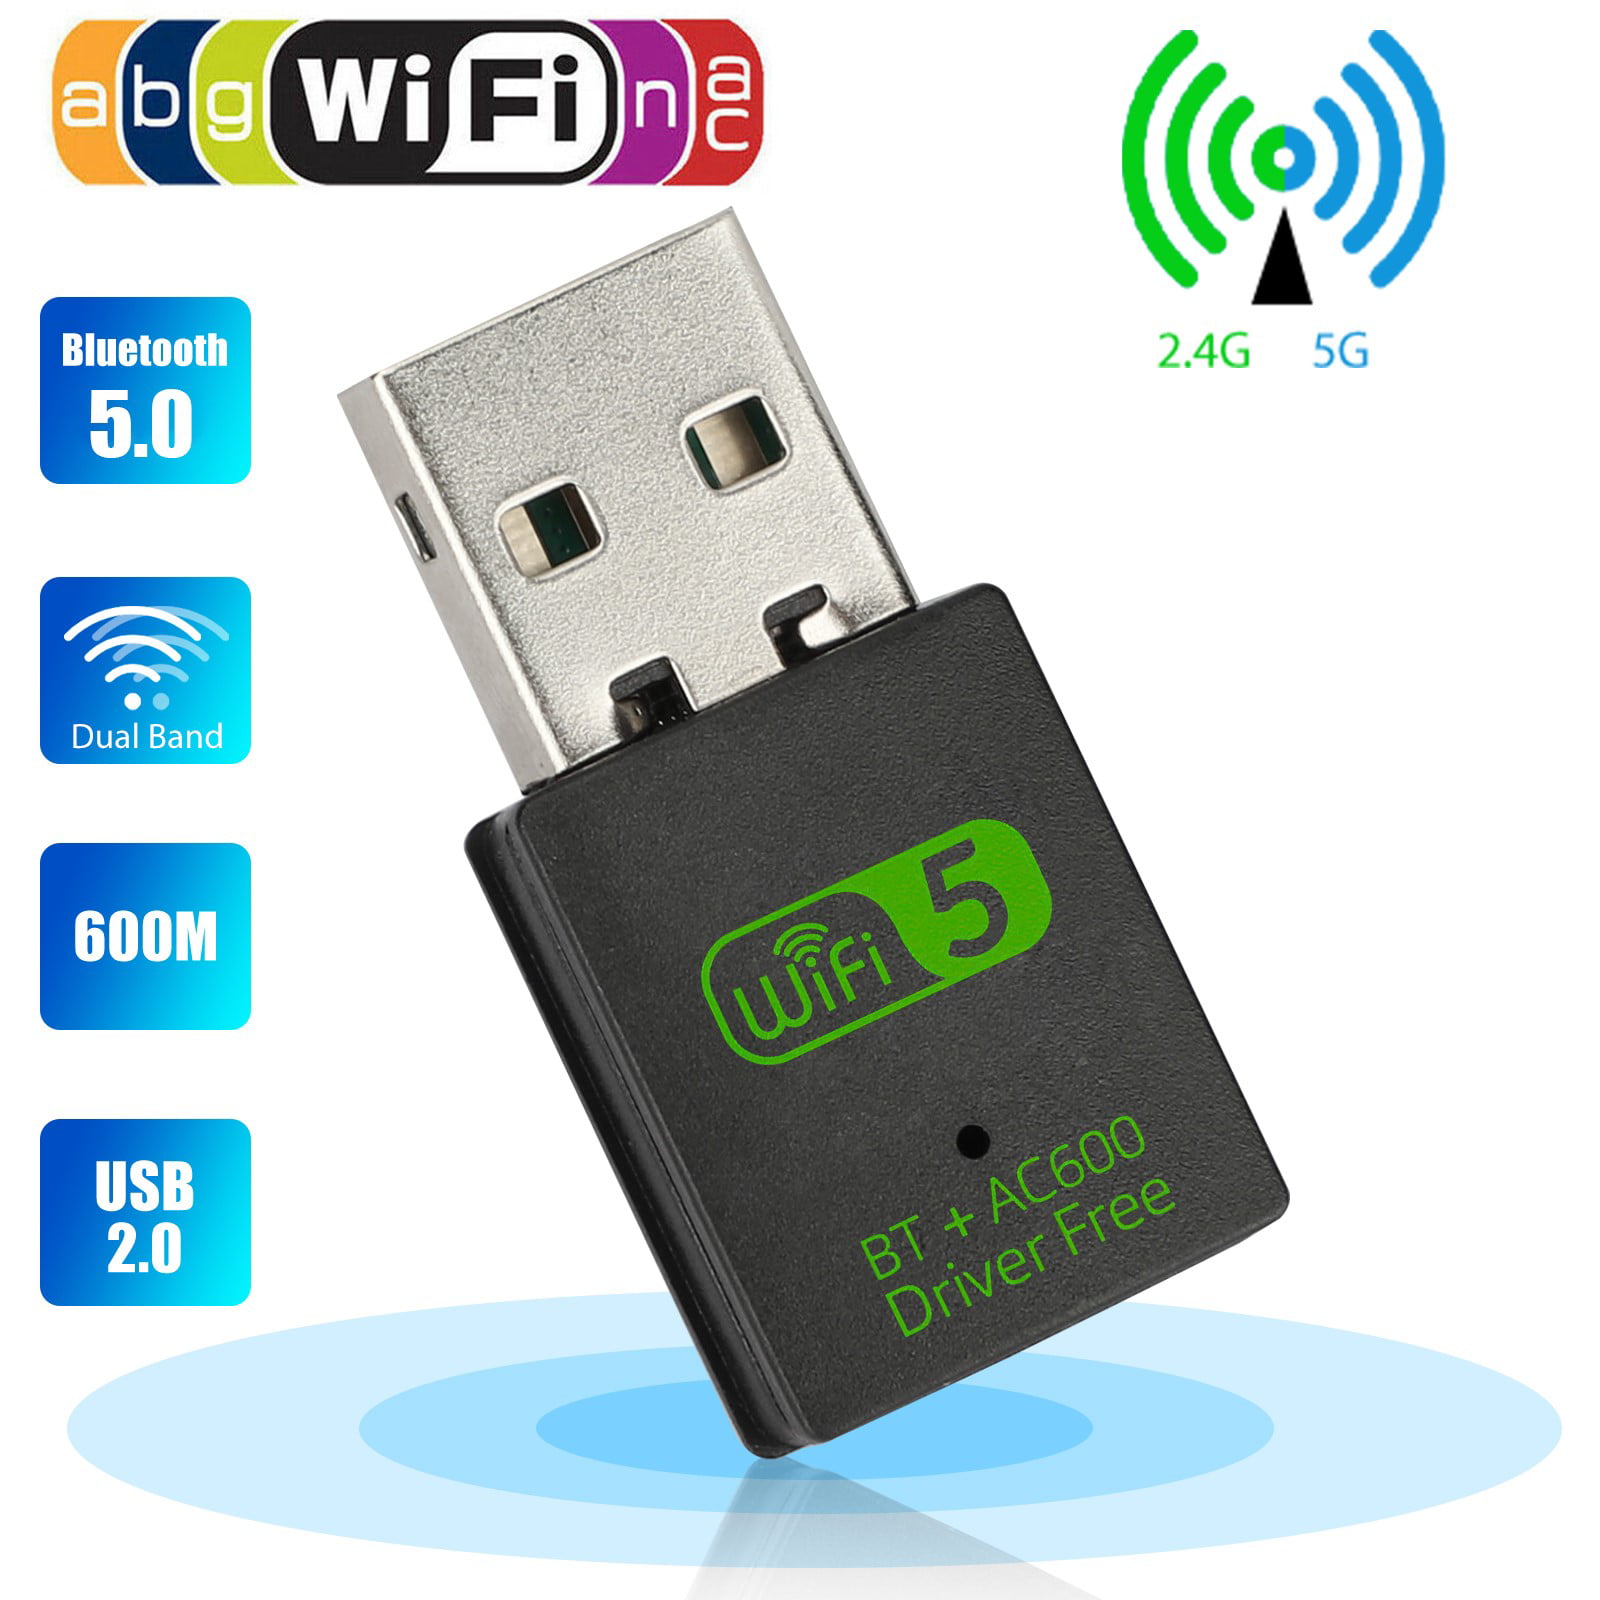 Vista/ XP 150Mbps USB WiFi Adapter 2.4GHz 802.11 ac/a/b/g/n  Support Windows 7 